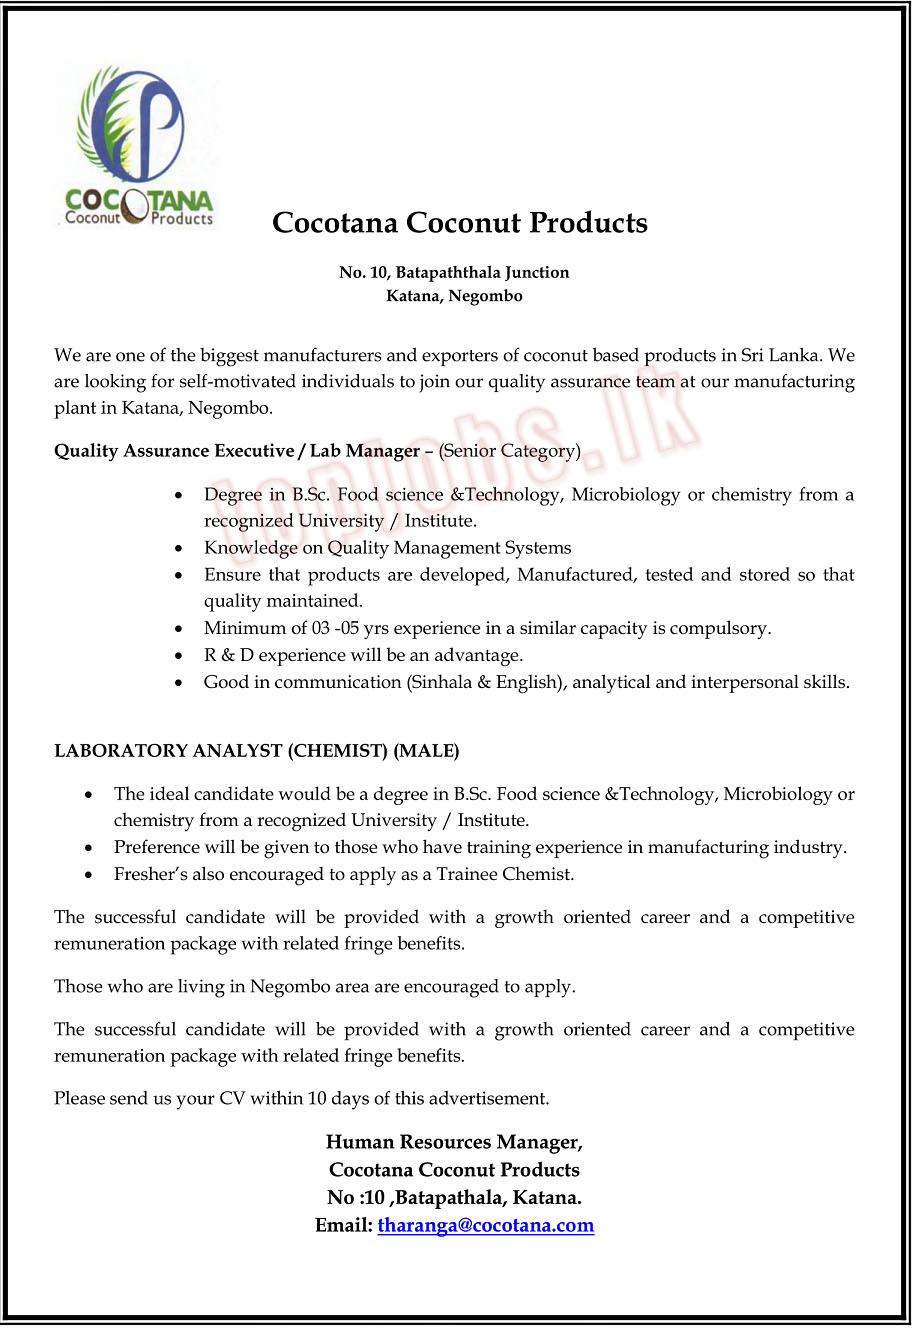 Vacancies in Cocotana Coconut Products